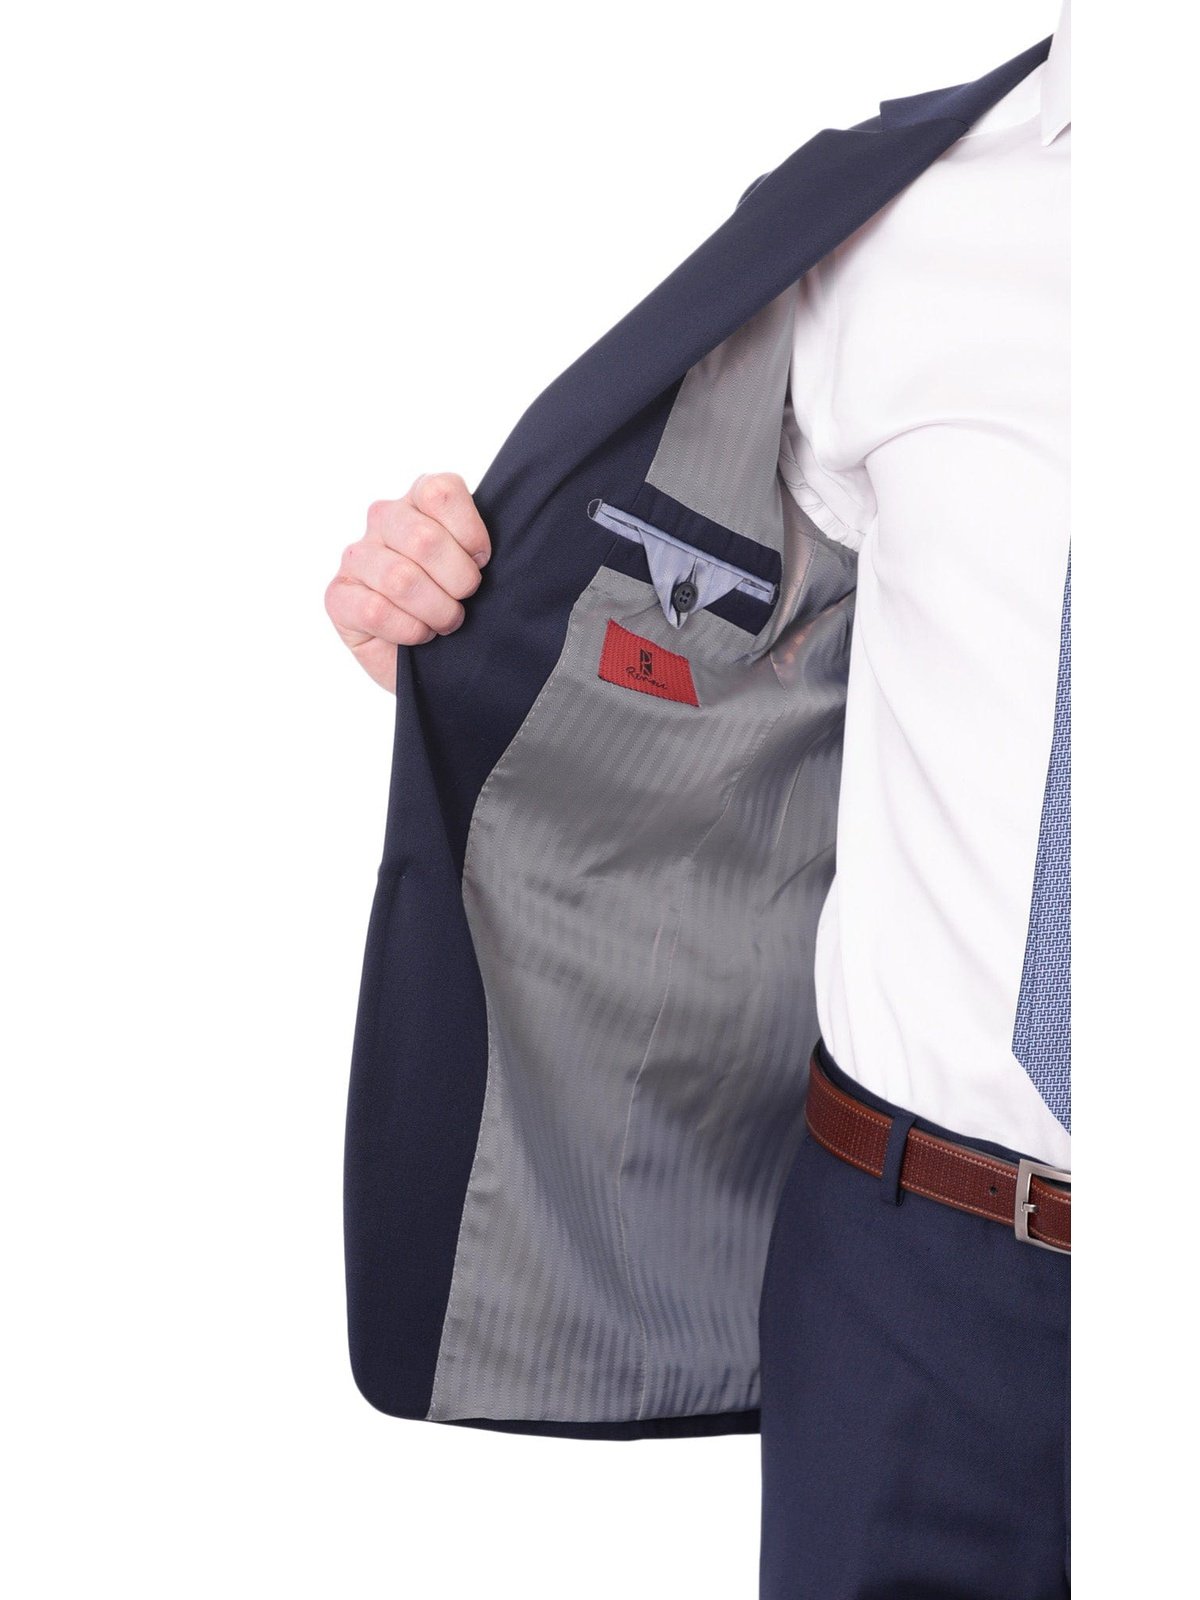 Raphael Bestselling Items Men's Raphael Slim Fit Wool-touch Solid Blue Two Button 2 Piece Suit Jacket & Pants